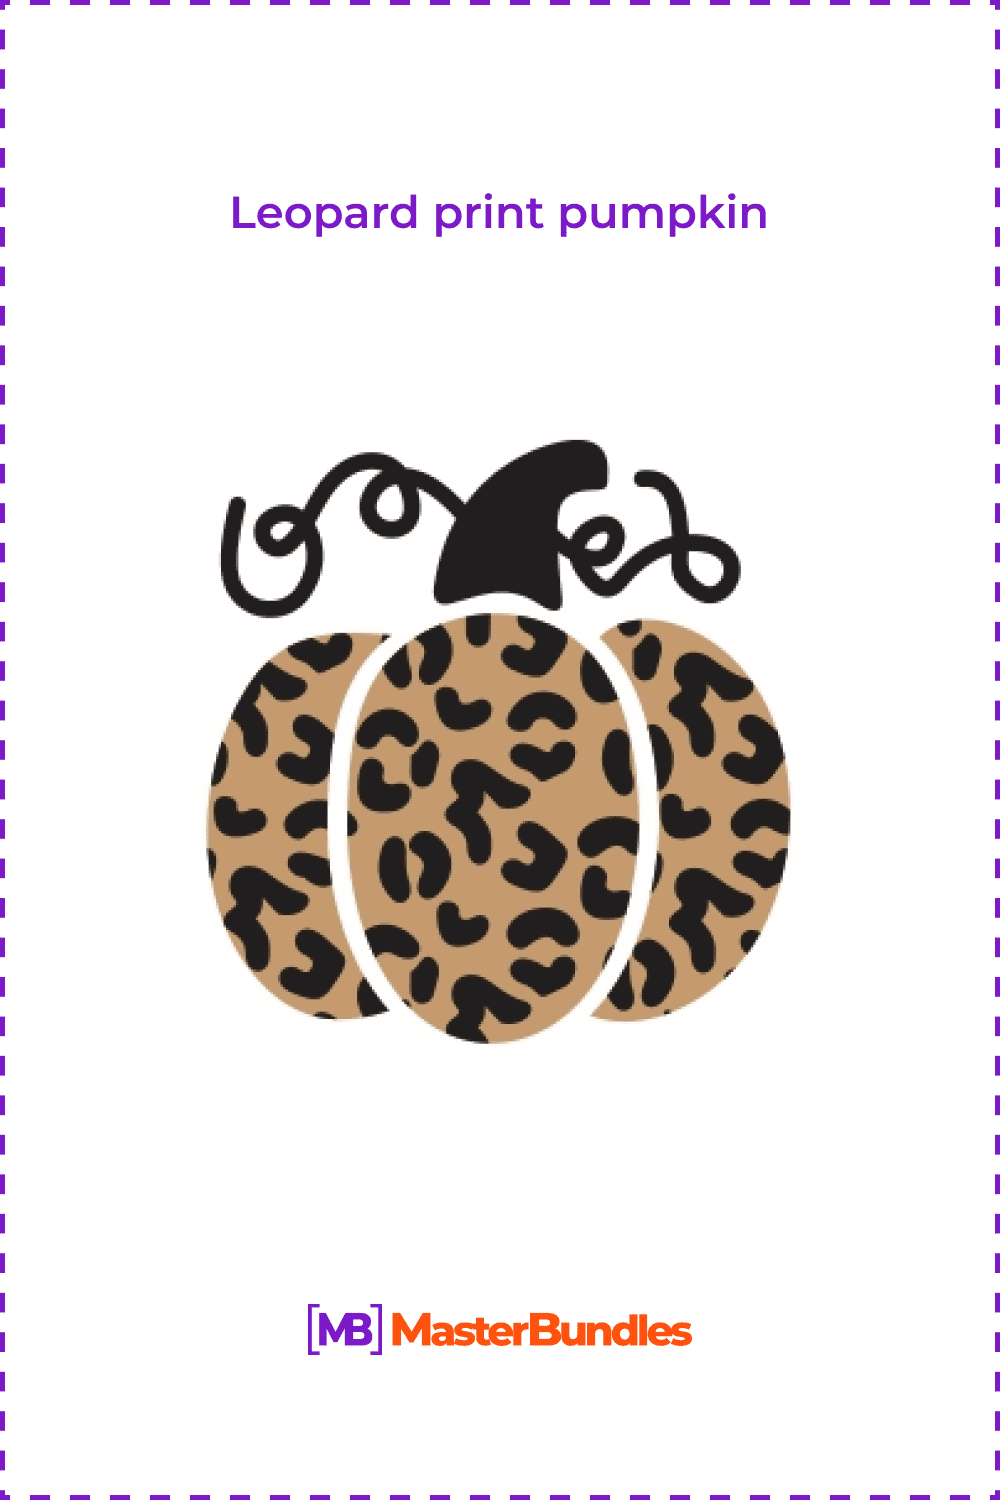 Leopard print pumpkin.